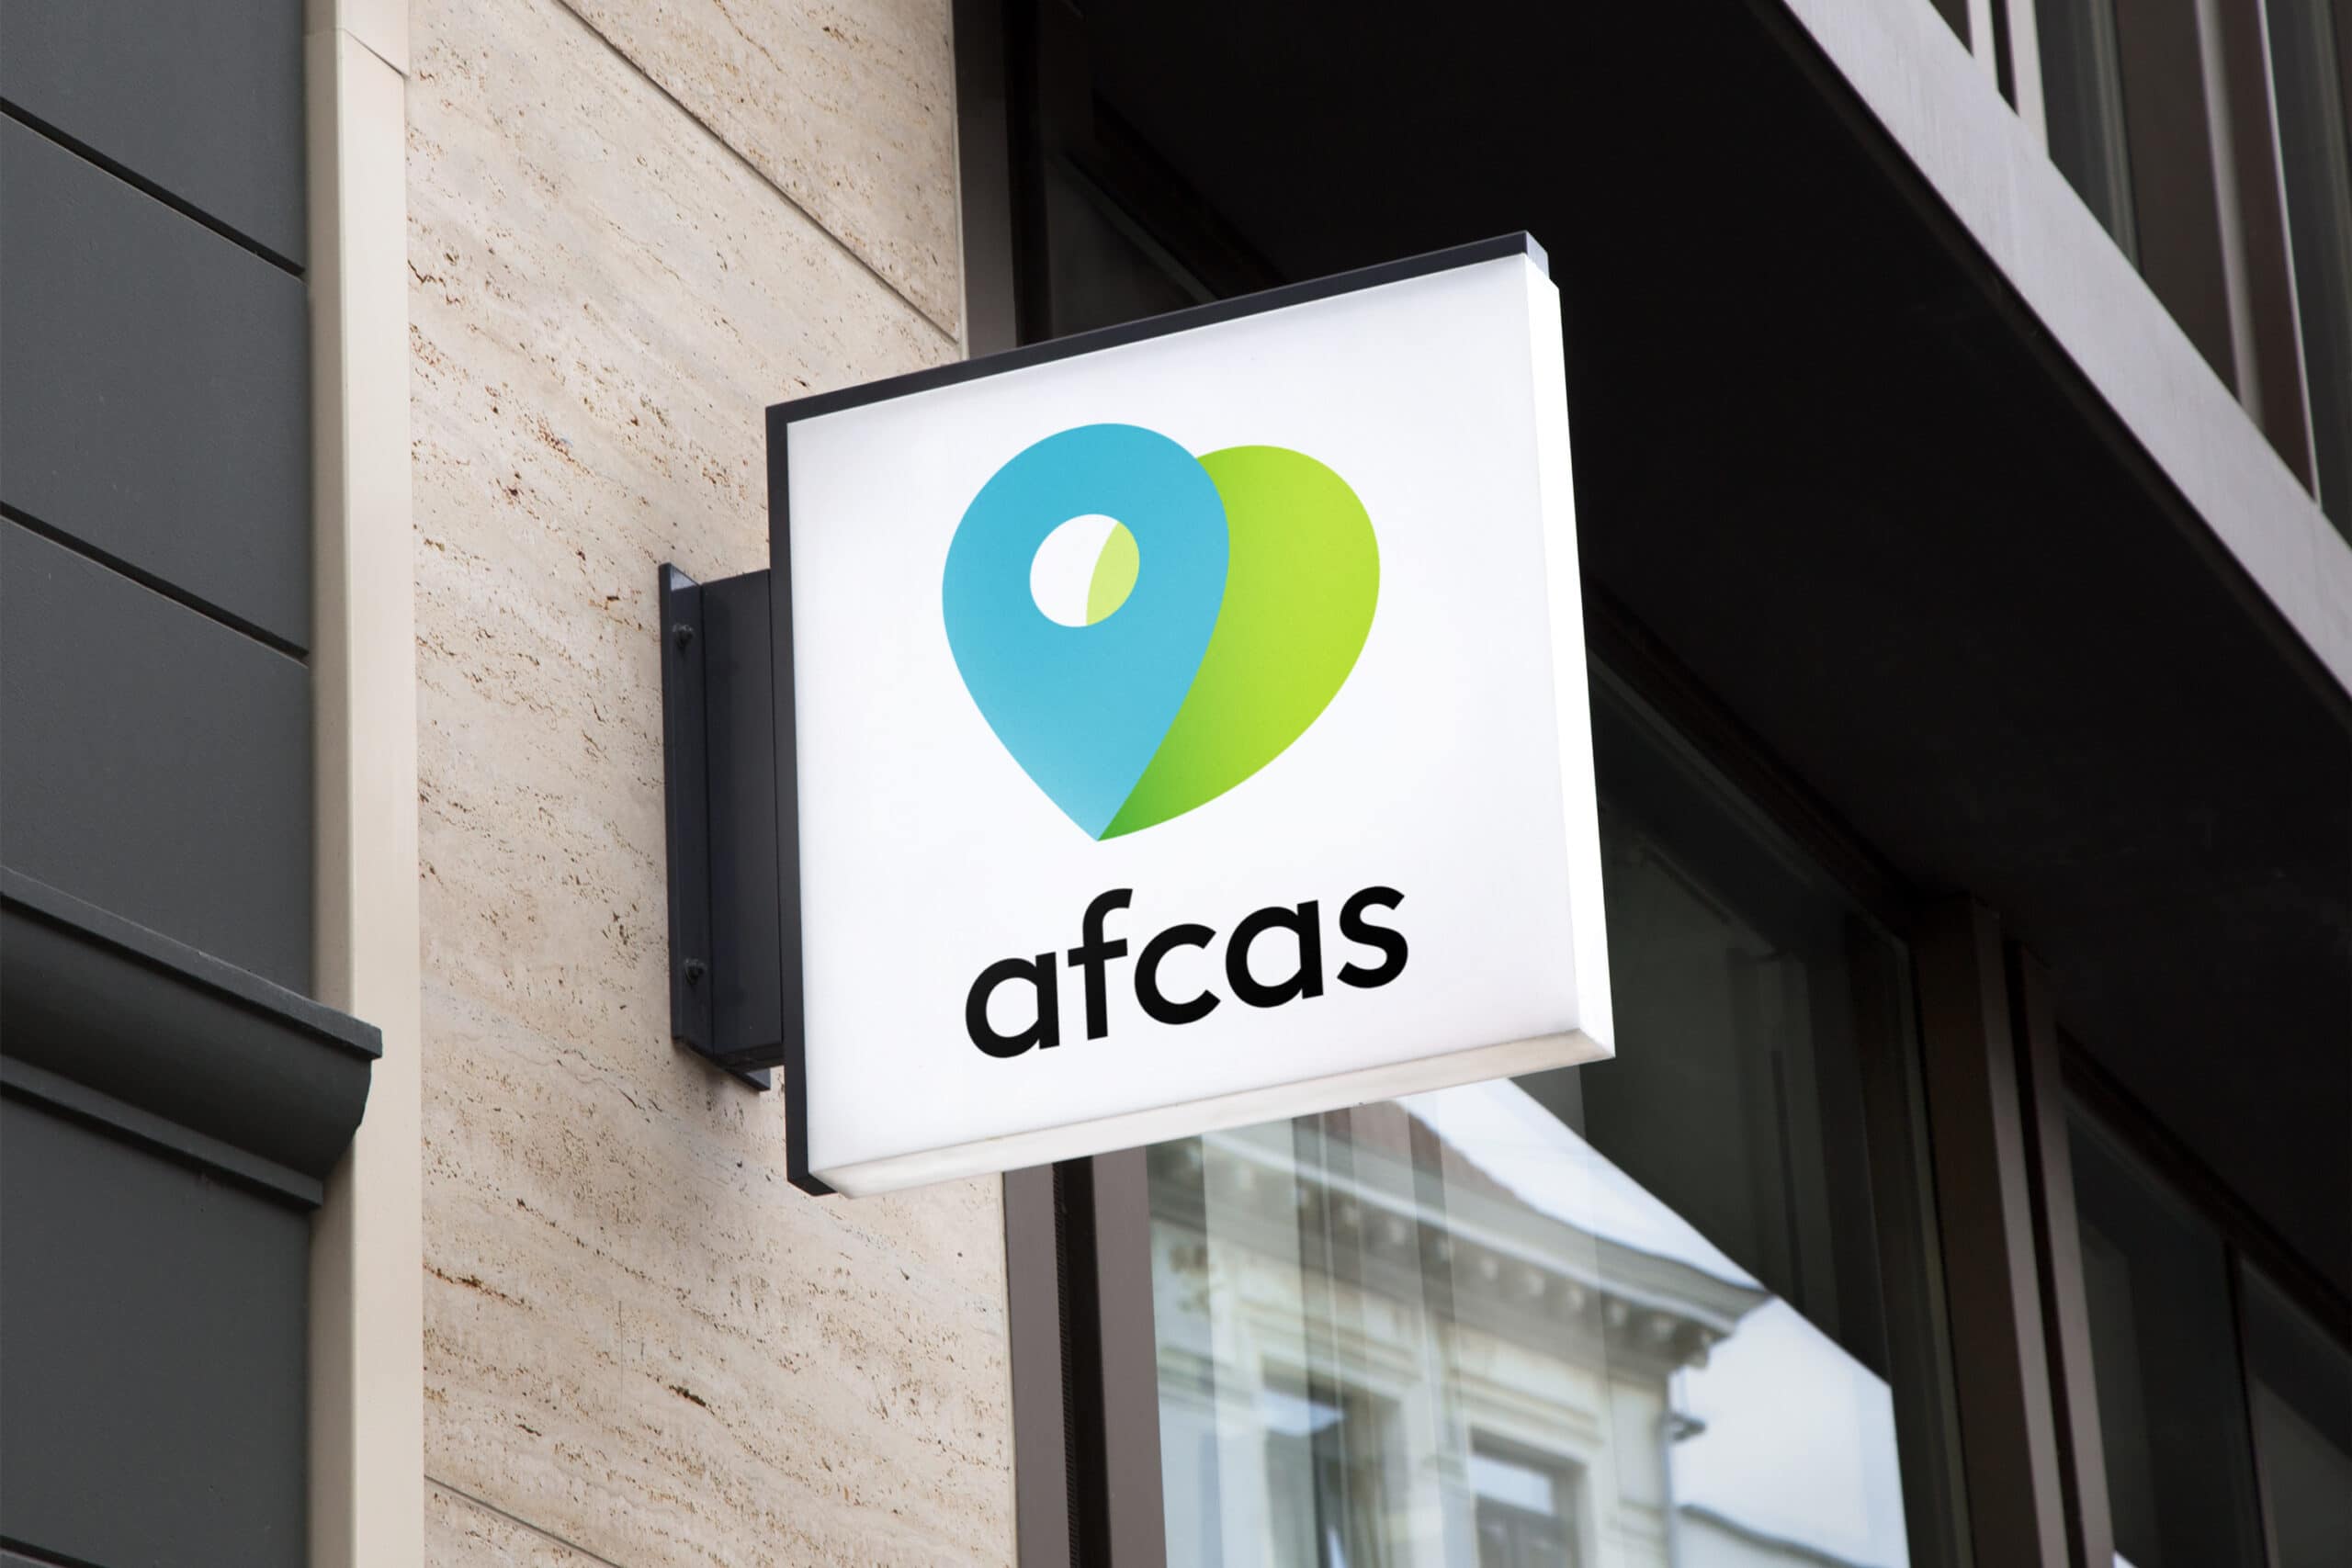 Enseigne lumineuse avec le logo AFCAS (montage).